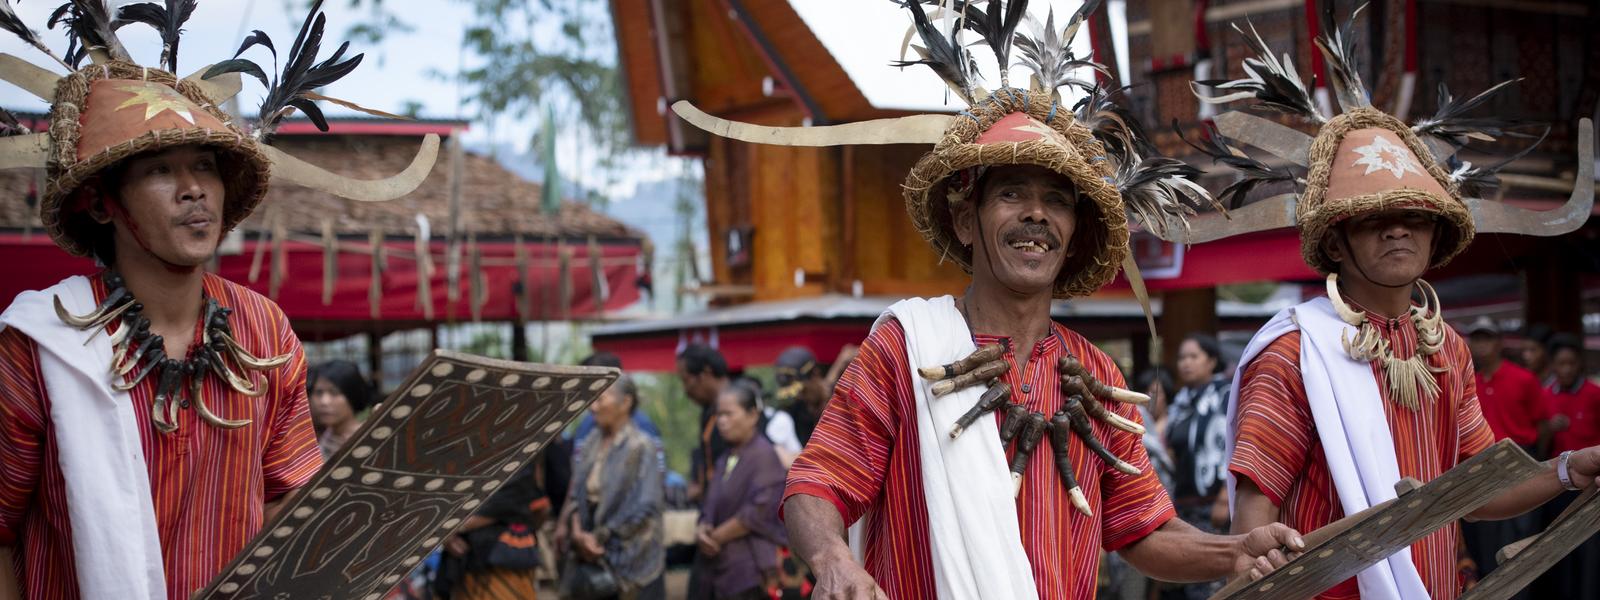 Sulawesi festival